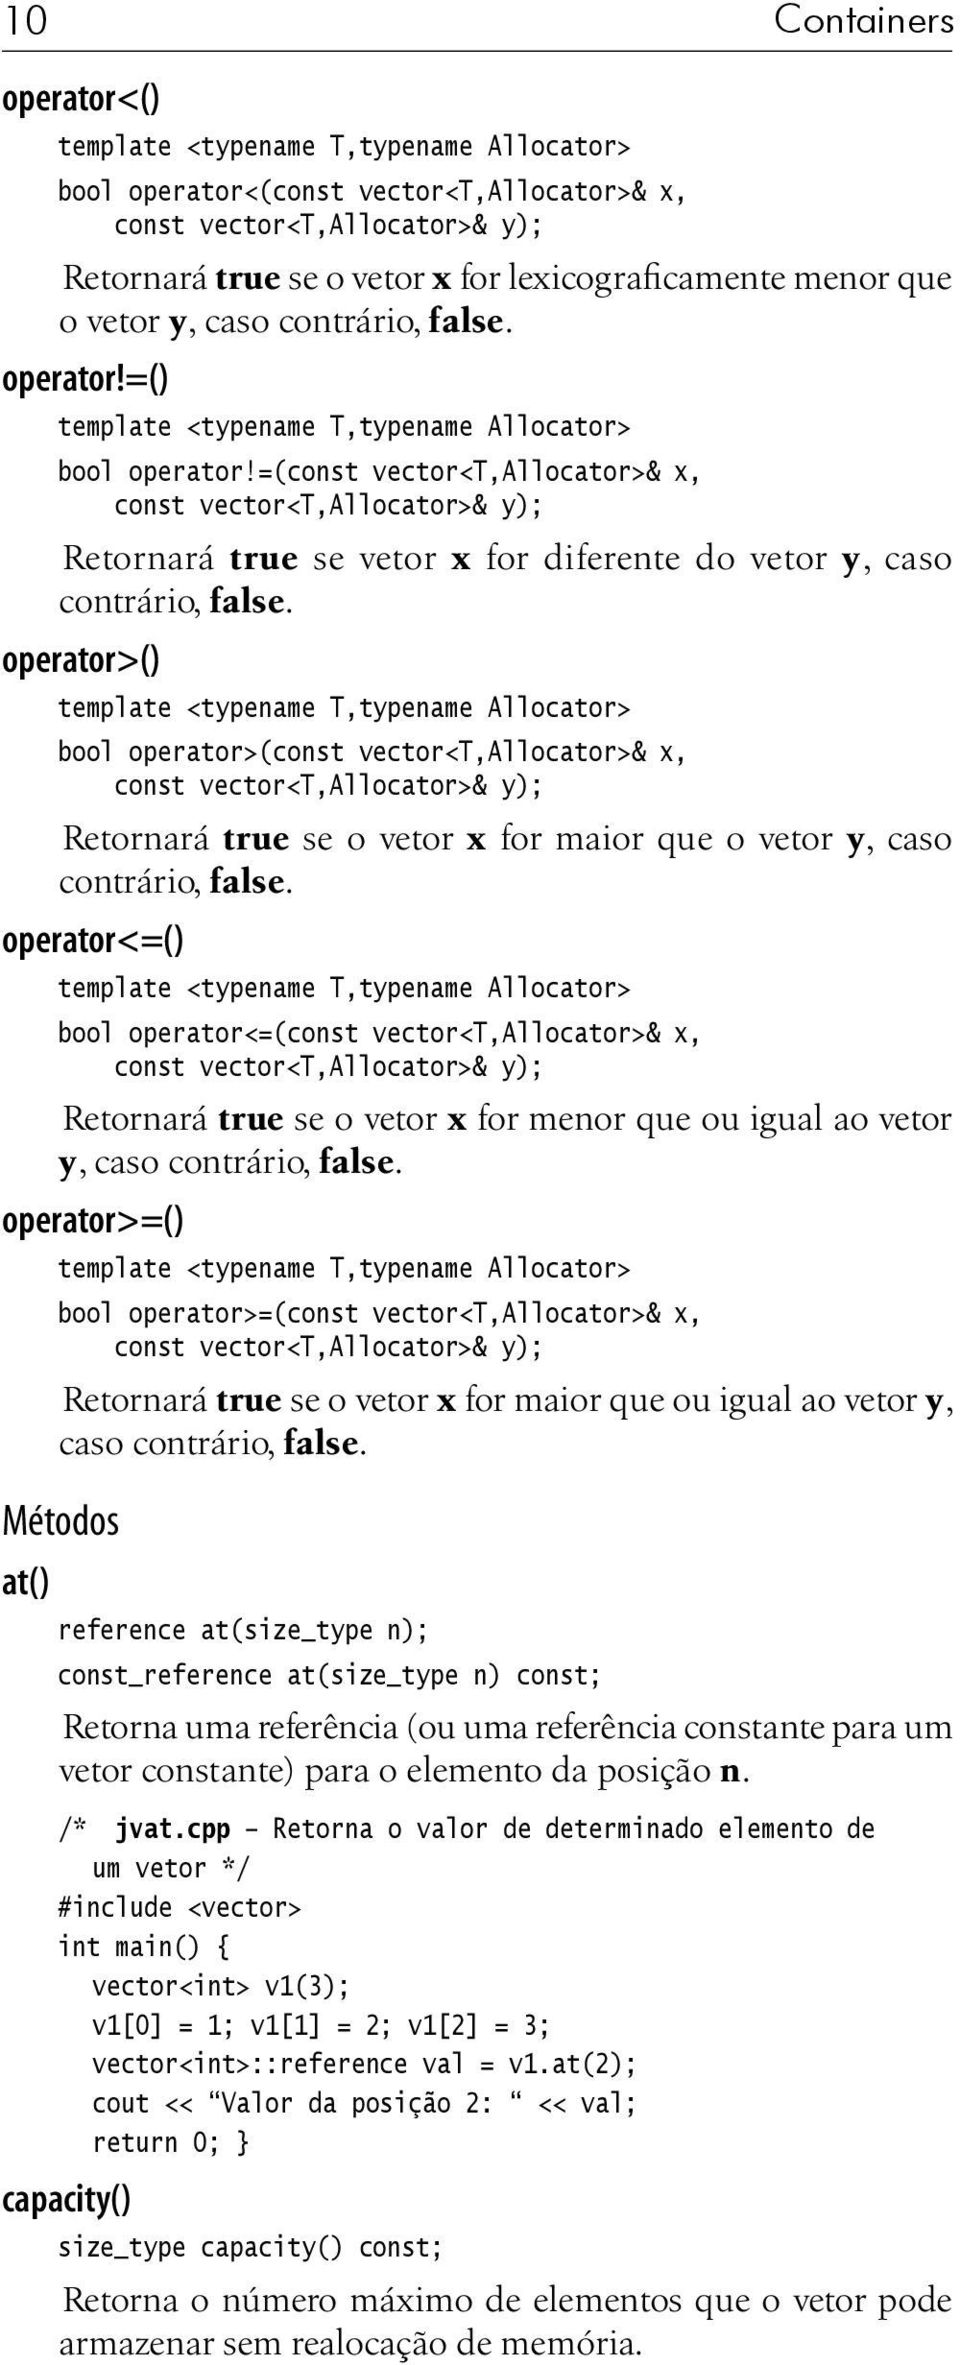 operator>() bool operator>(const vector<t,allocator>& x, const vector<t,allocator>& y); Retornará true se o vetor x for maior que o vetor y, caso contrário, false.